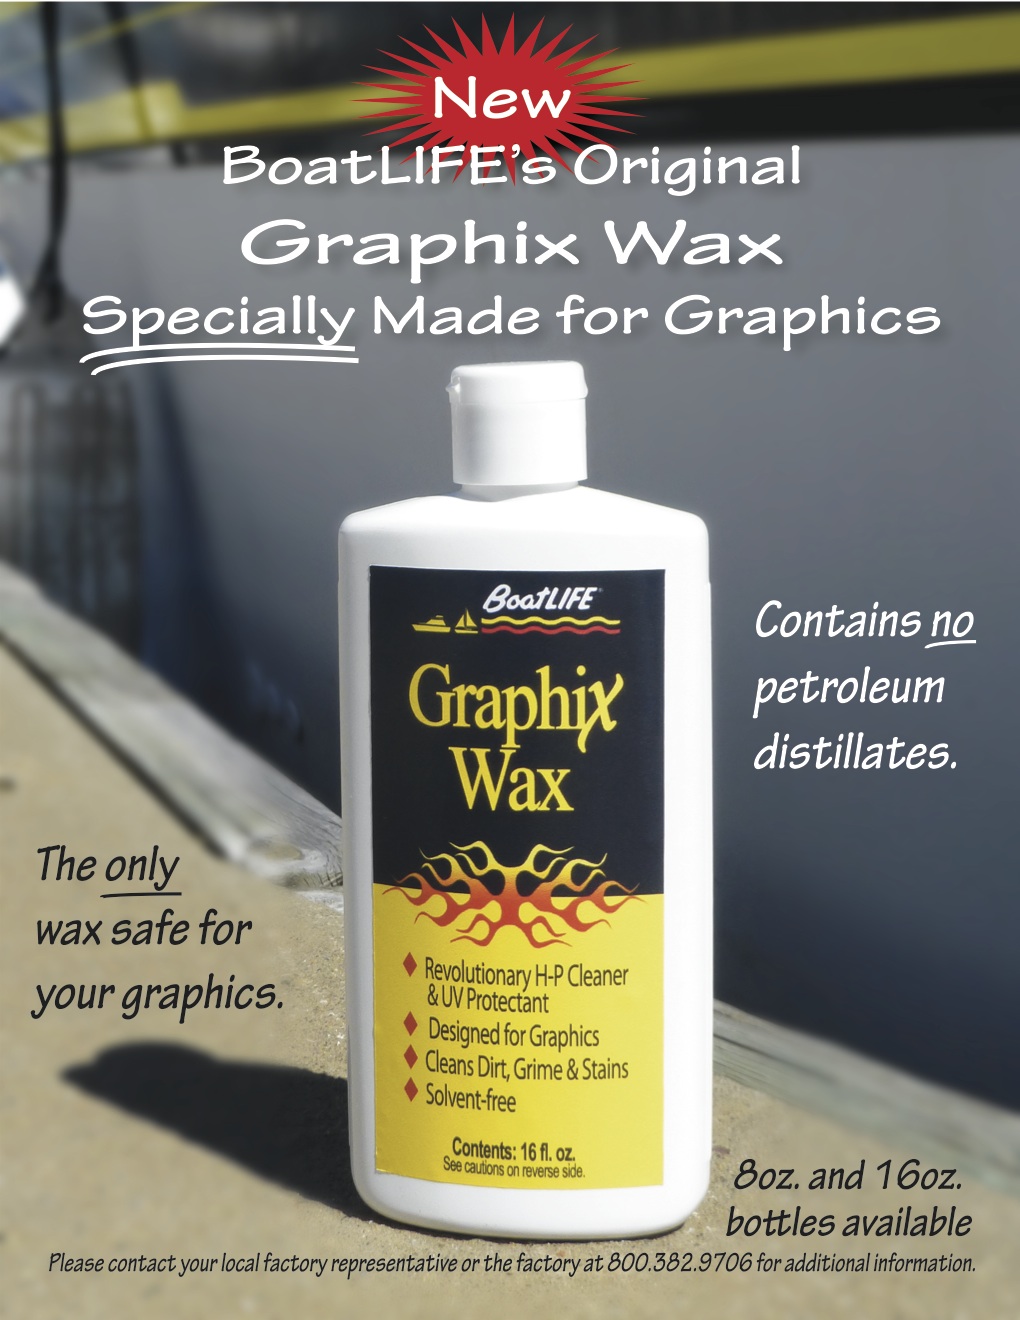 Graphix wax